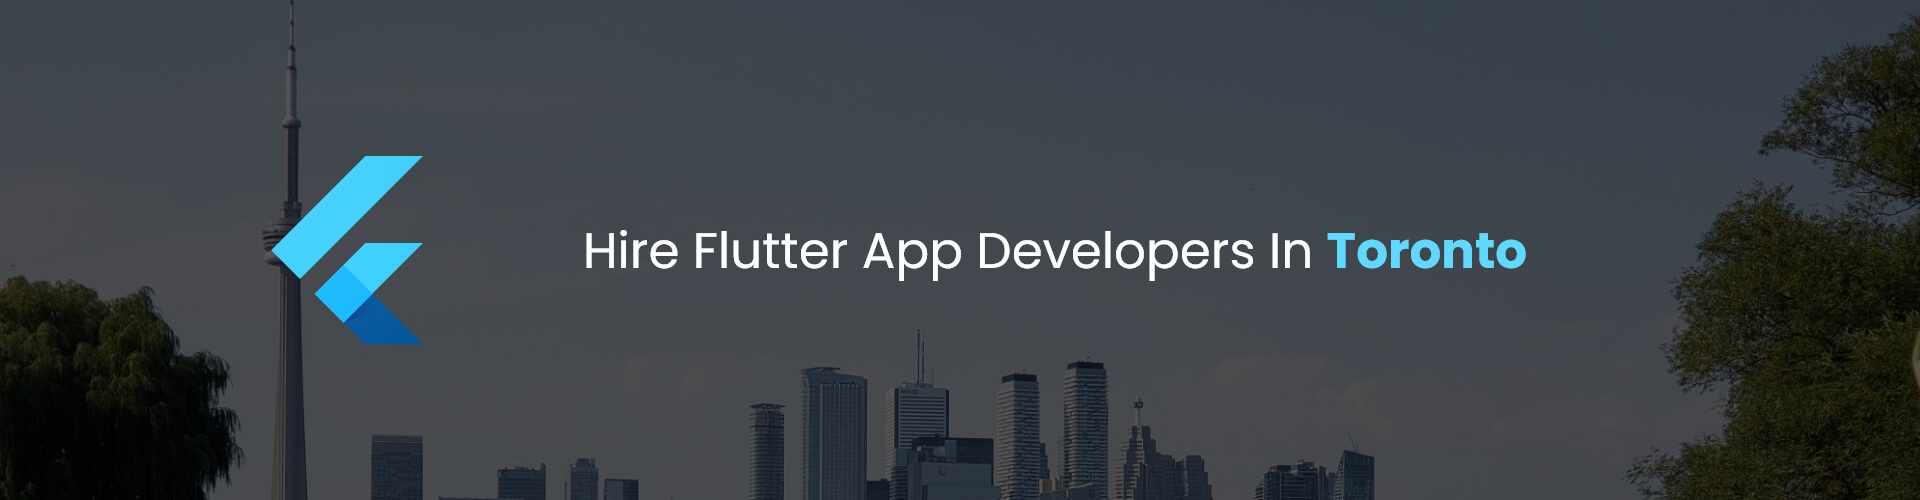 hire flutter app developers in toronto